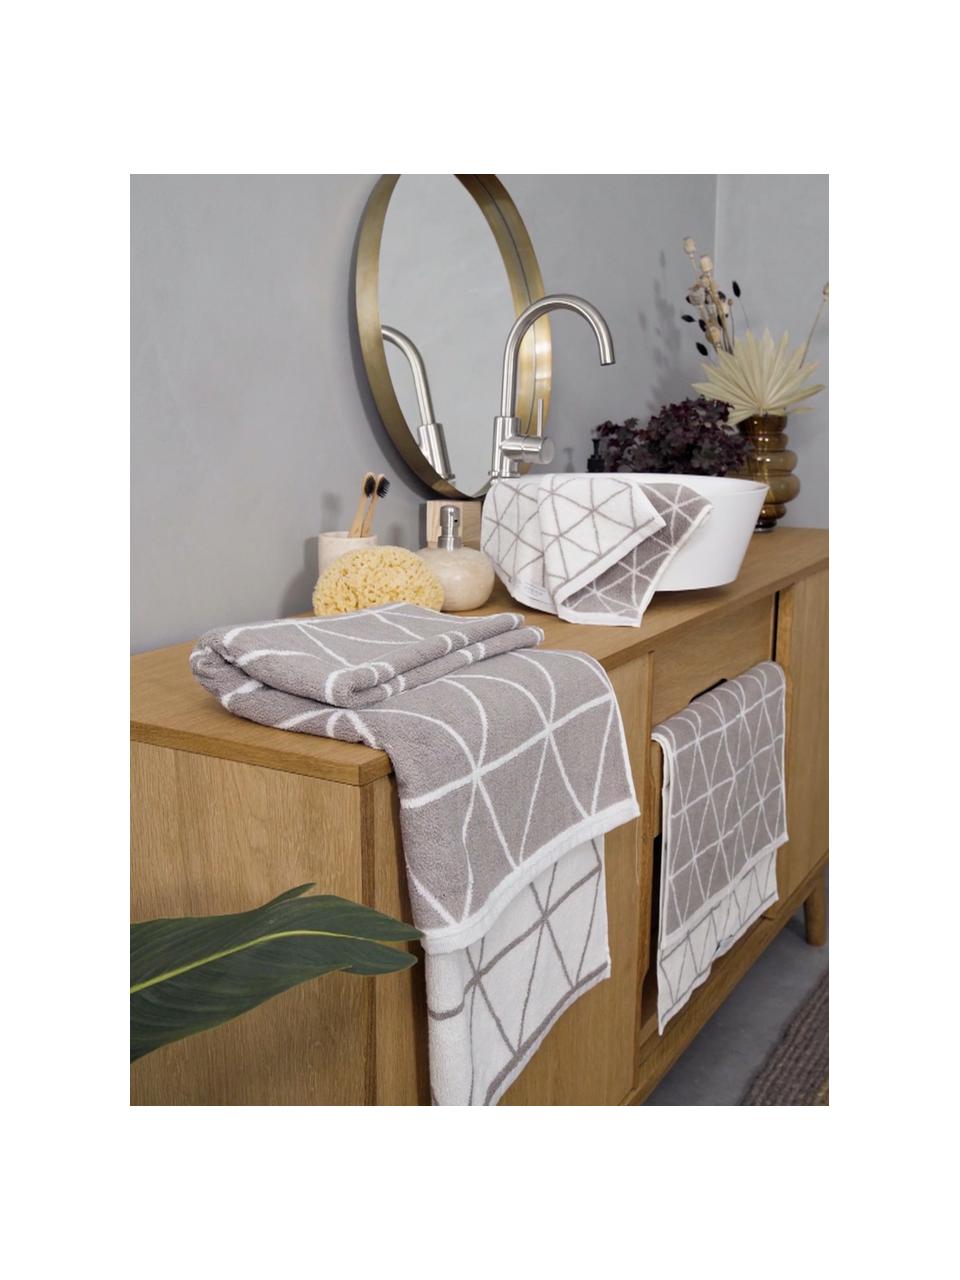 Set 3 asciugamani reversibili con motivo grafico Elina, Taupe & bianco crema, fantasia, Set in varie misure